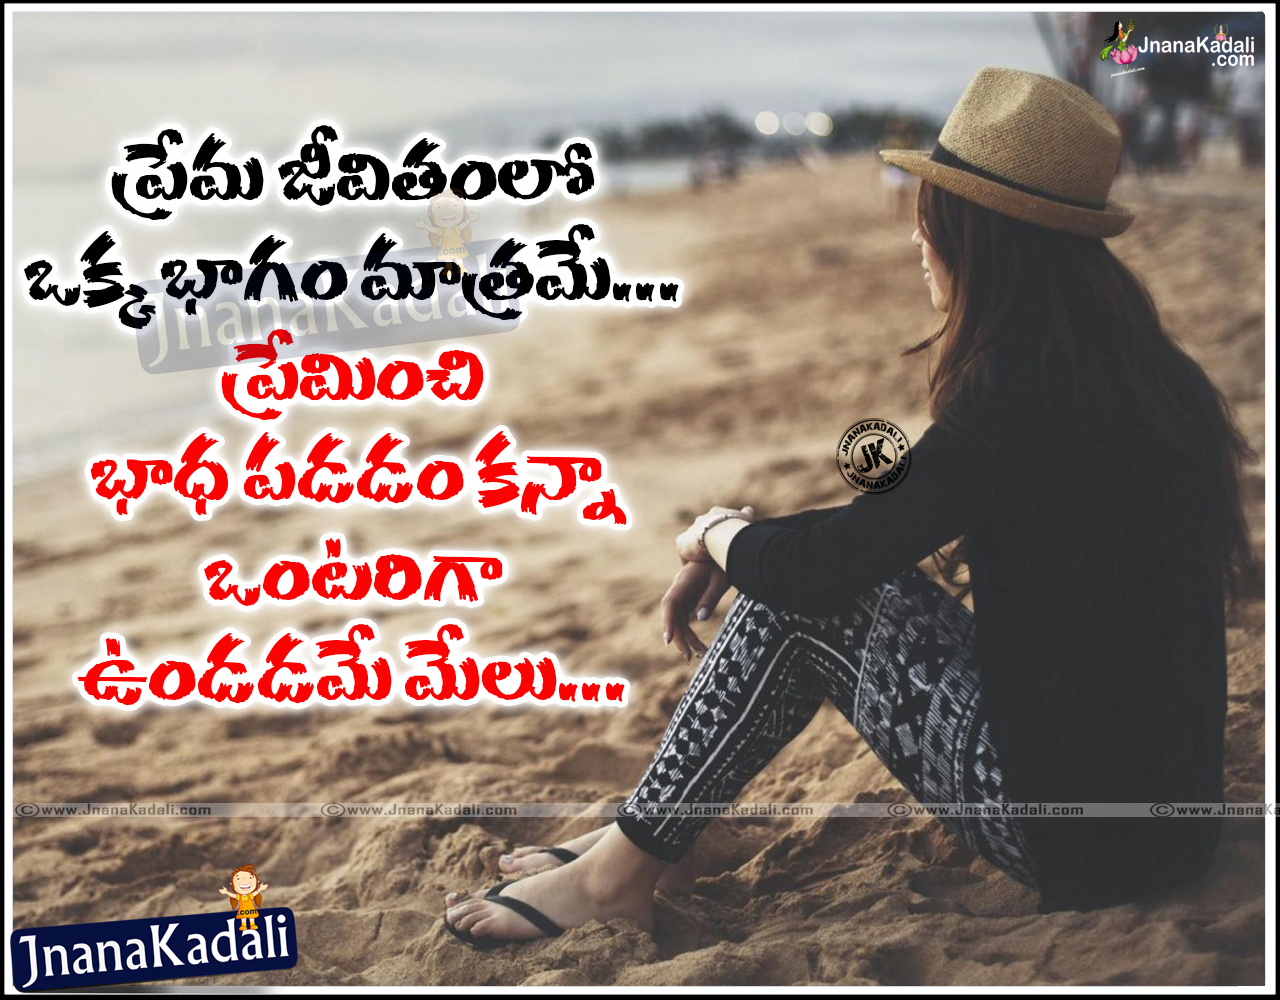 Telugu Love Failure and Miss You Quotations Images Free | JNANA KADALI